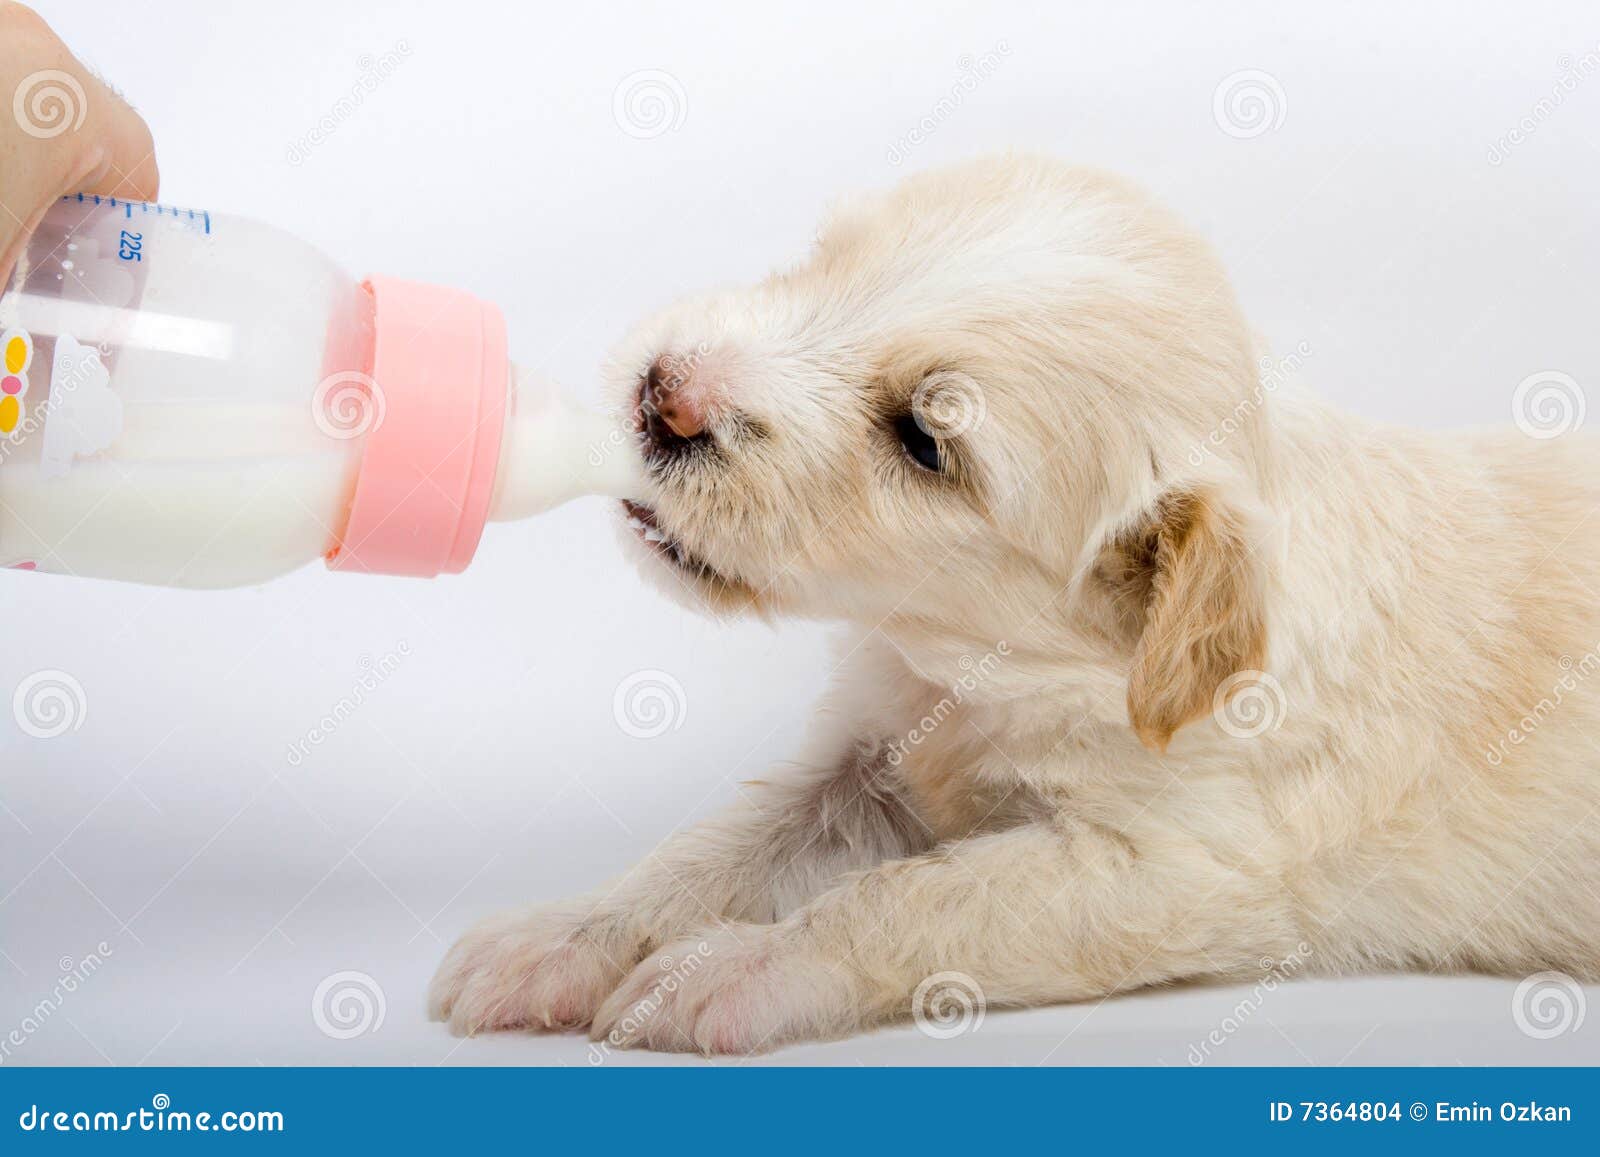 can pitbulls drink milk